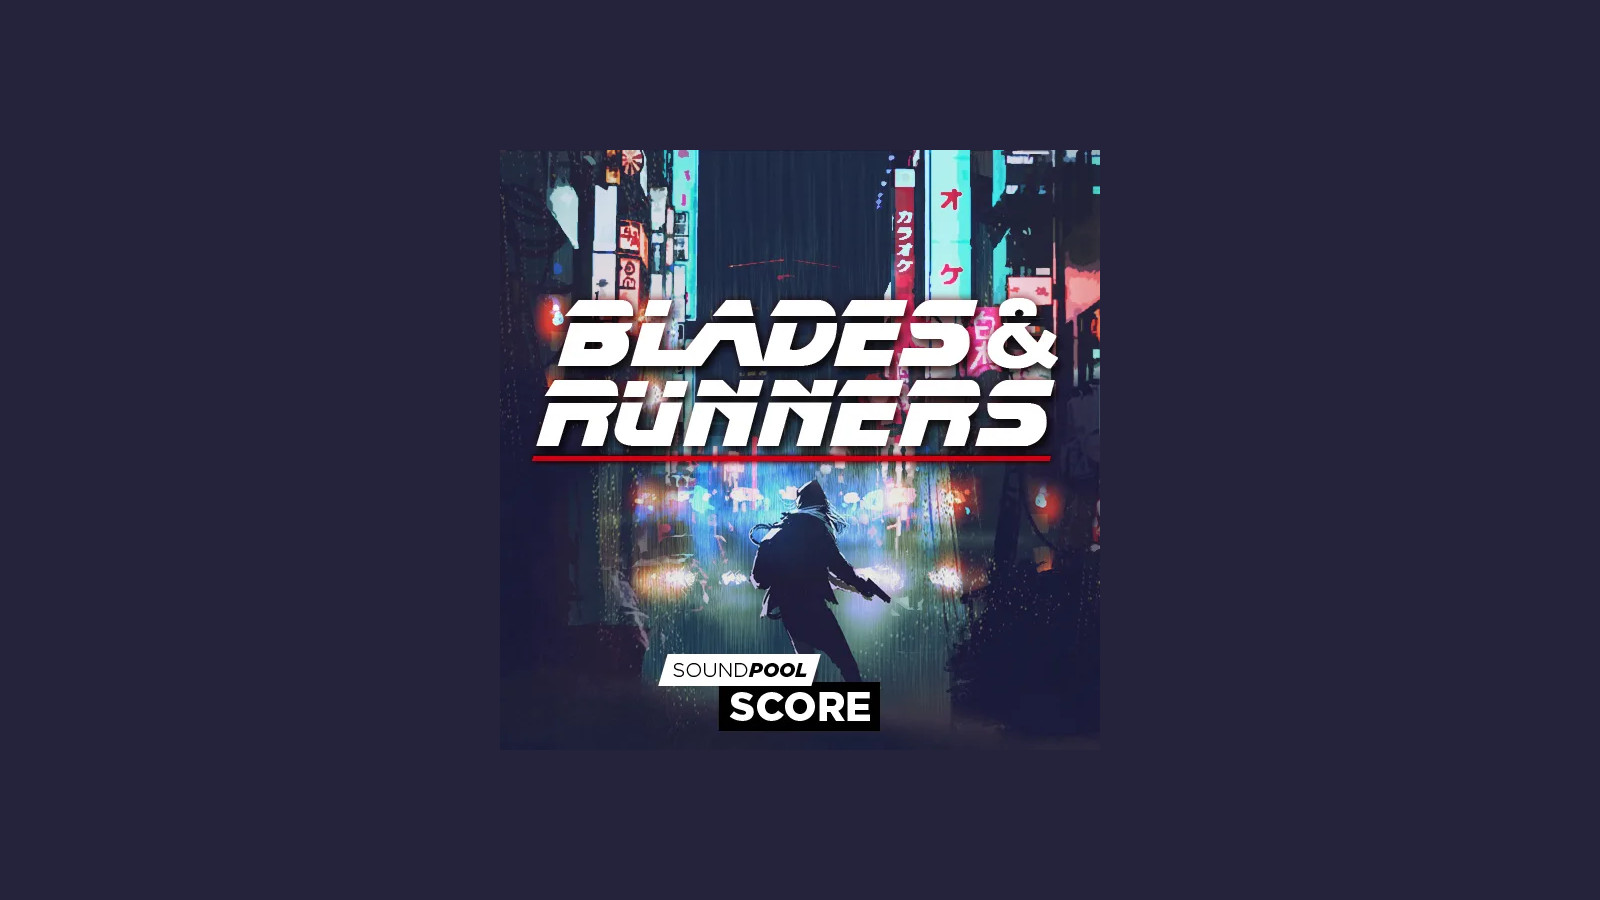 MAGIX Soundpool Blades & Runners ProducerPlanet CD Key, 5.65$